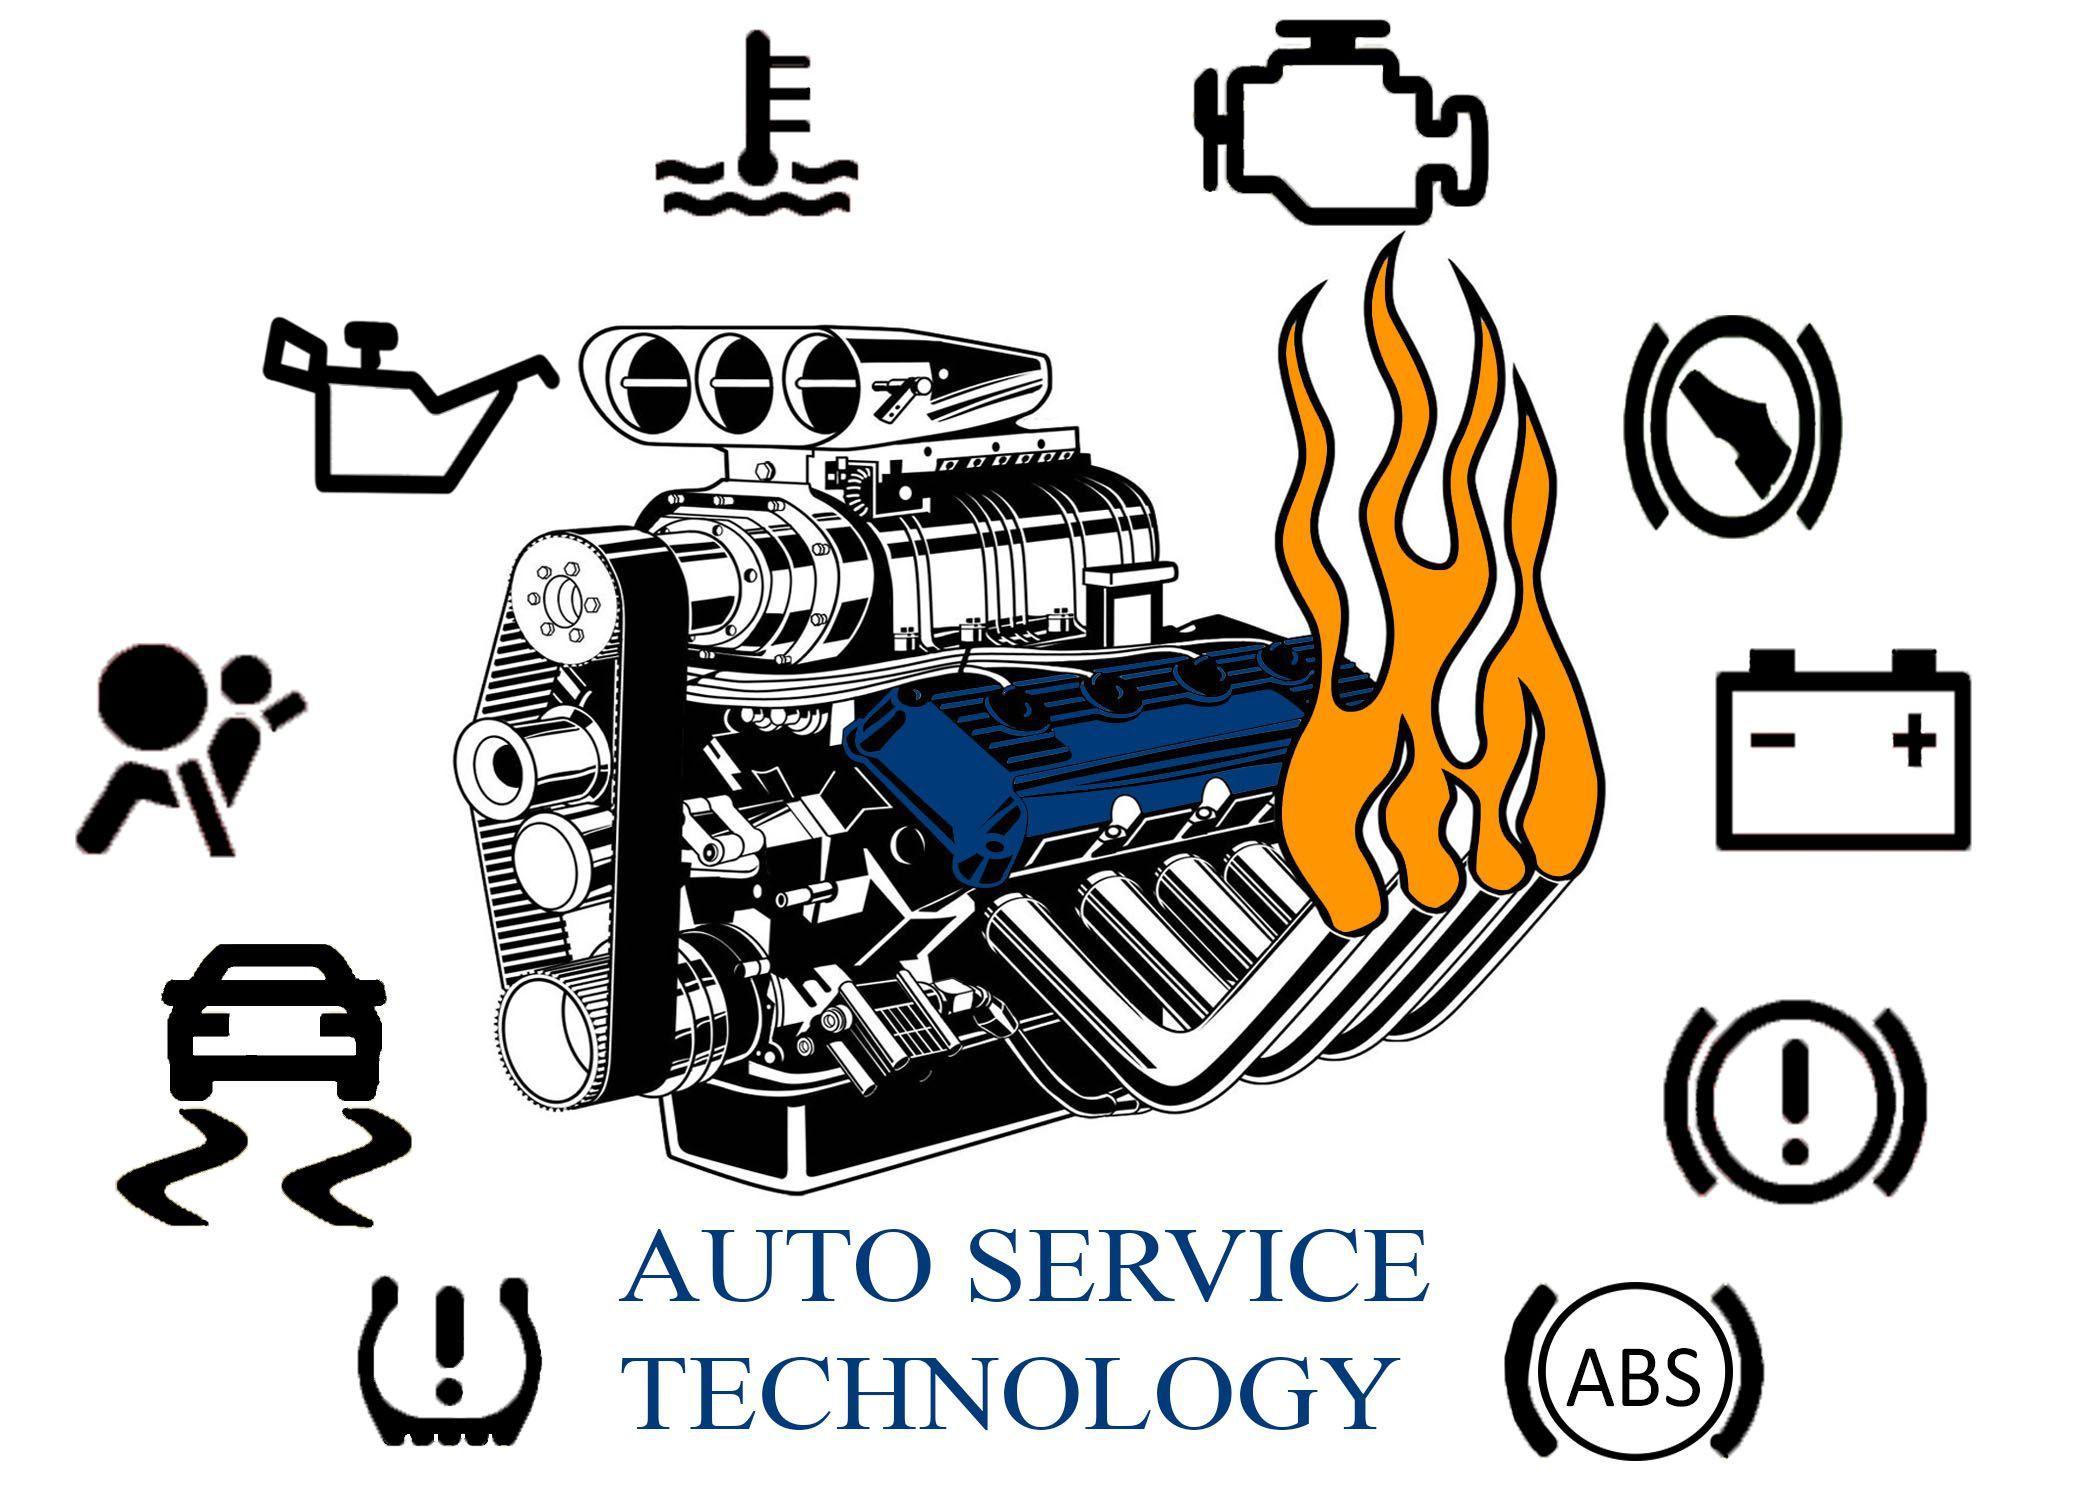 Automotive Service Logo - Auto Service Technology. Southeastern Career Center